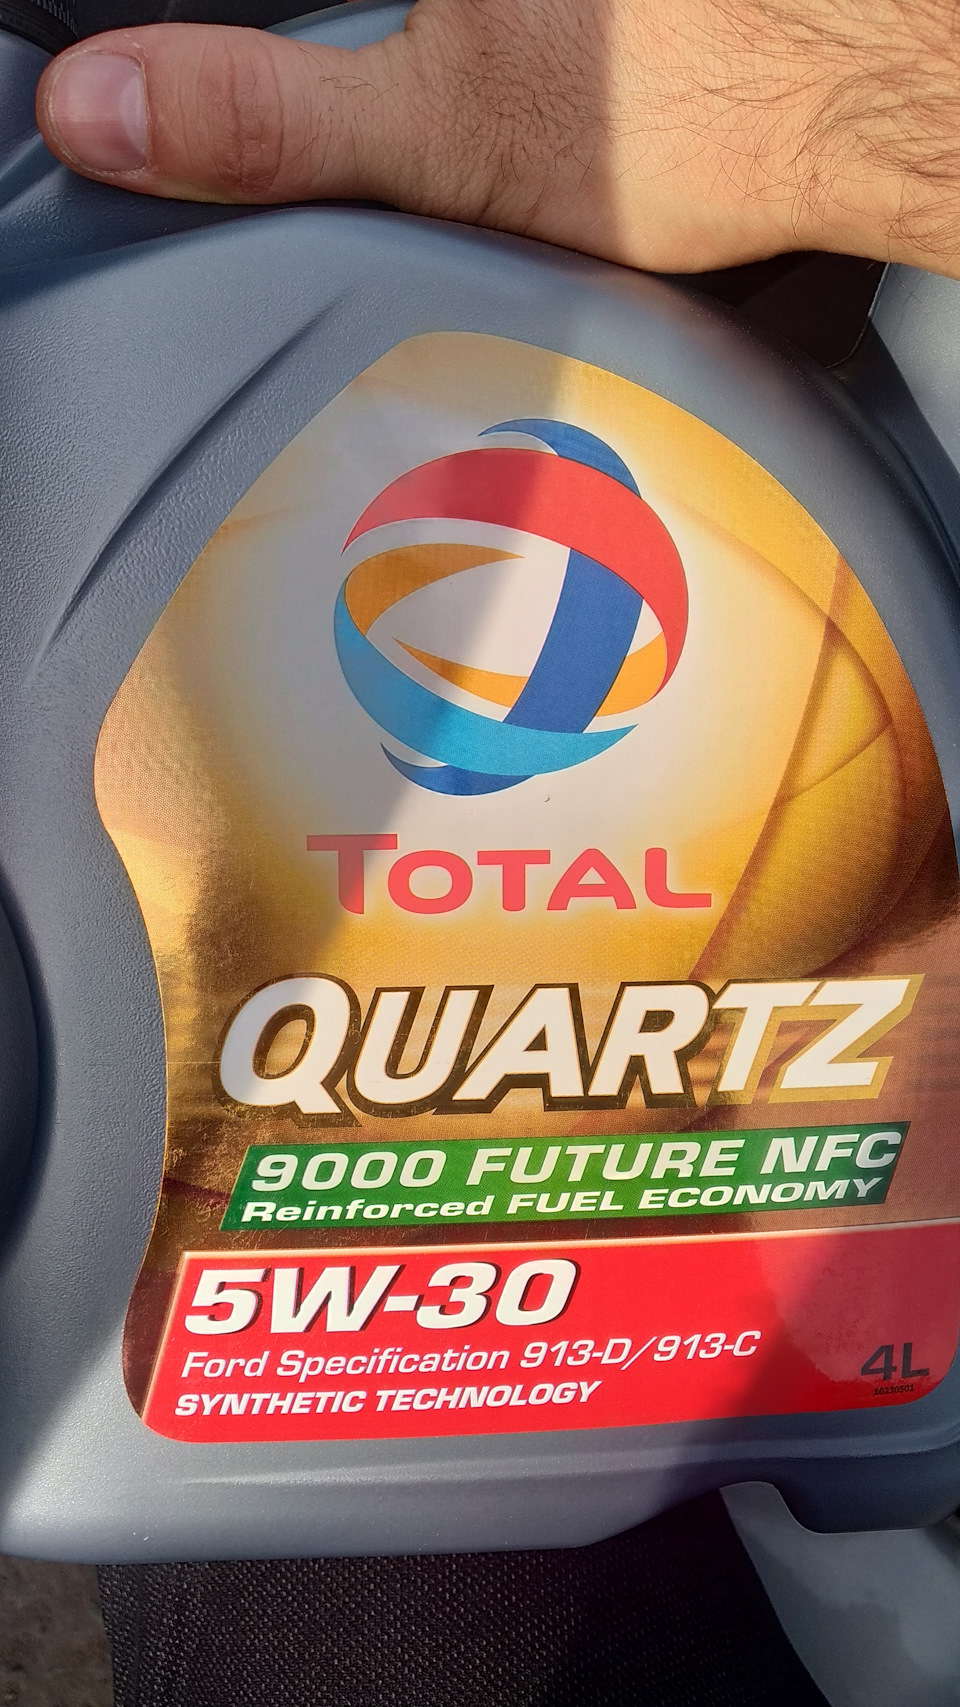 Total quartz future nfc